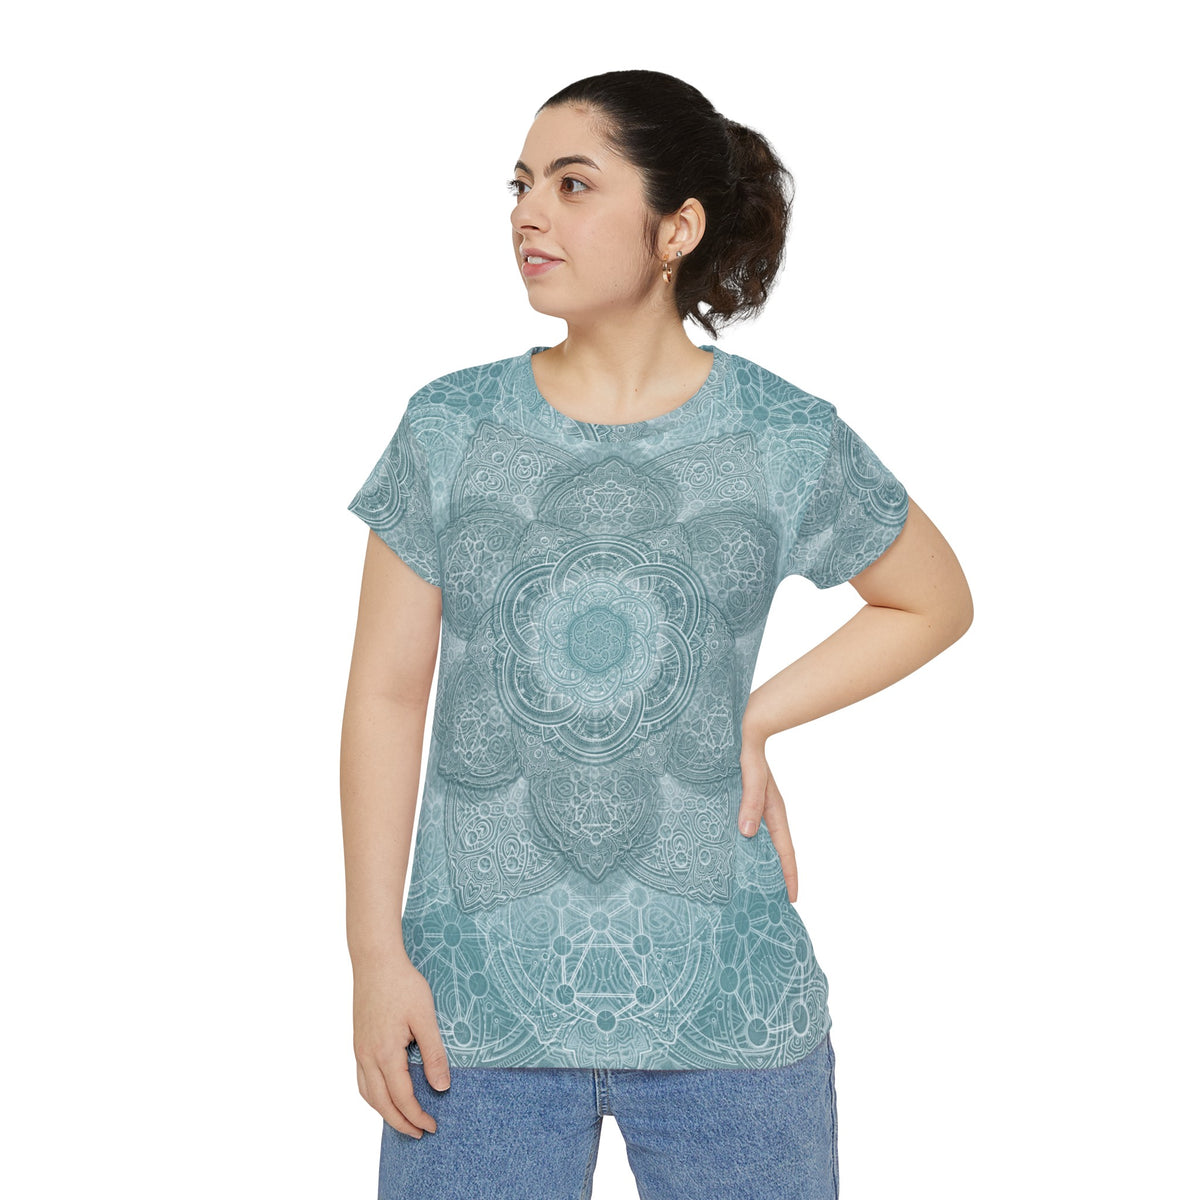 Flower of life Mandala - Women's Short Sleeve Shirt